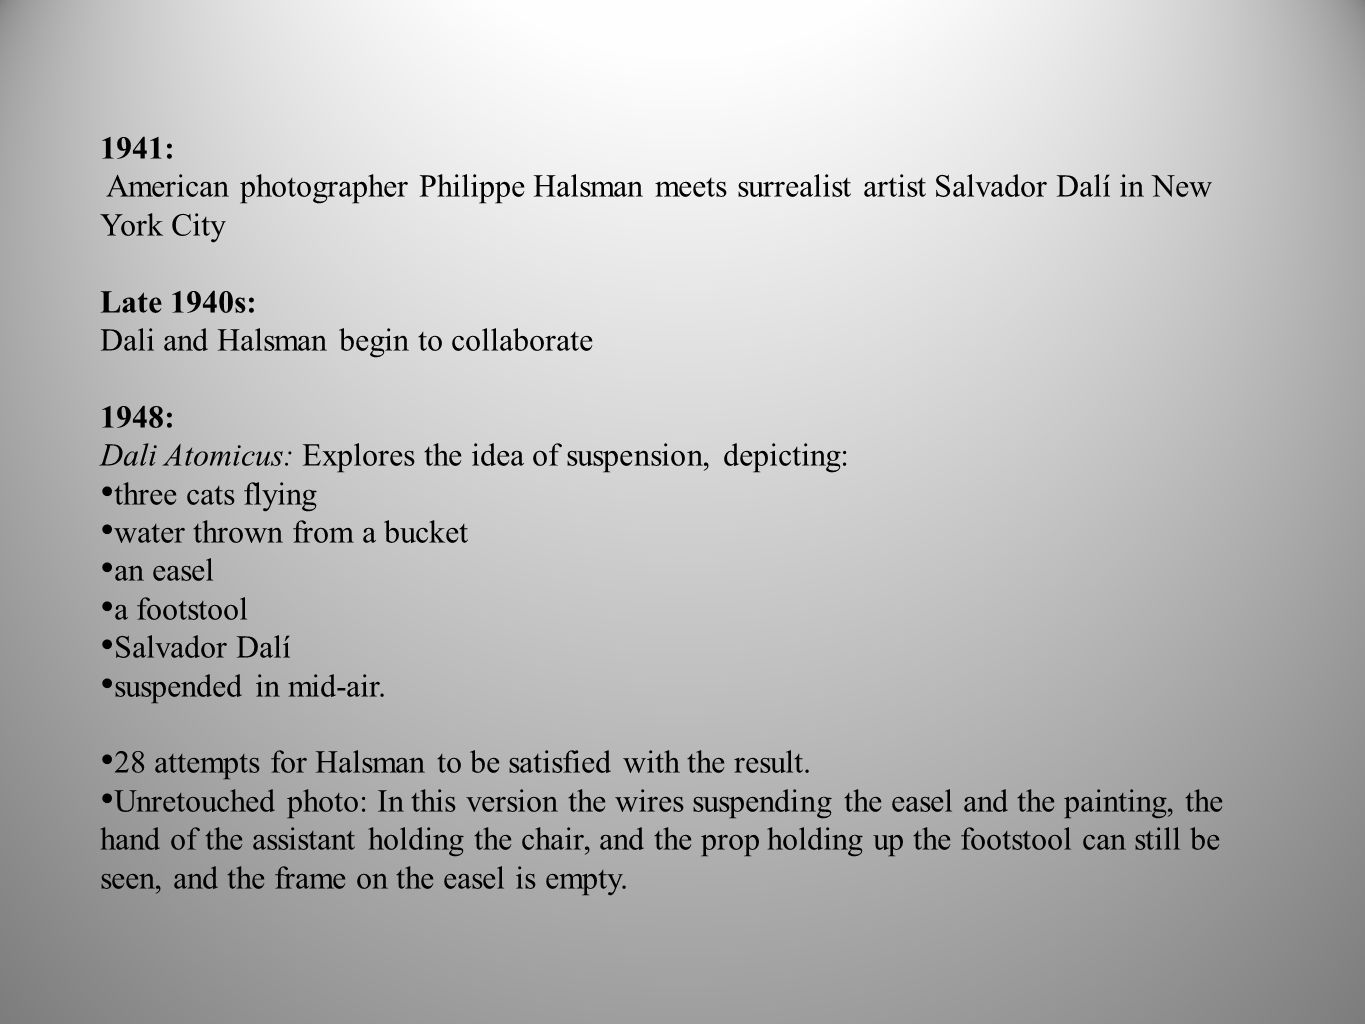 1941: American photographer Philippe Halsman meets surrealist artist Salvador Dalí in New York City.